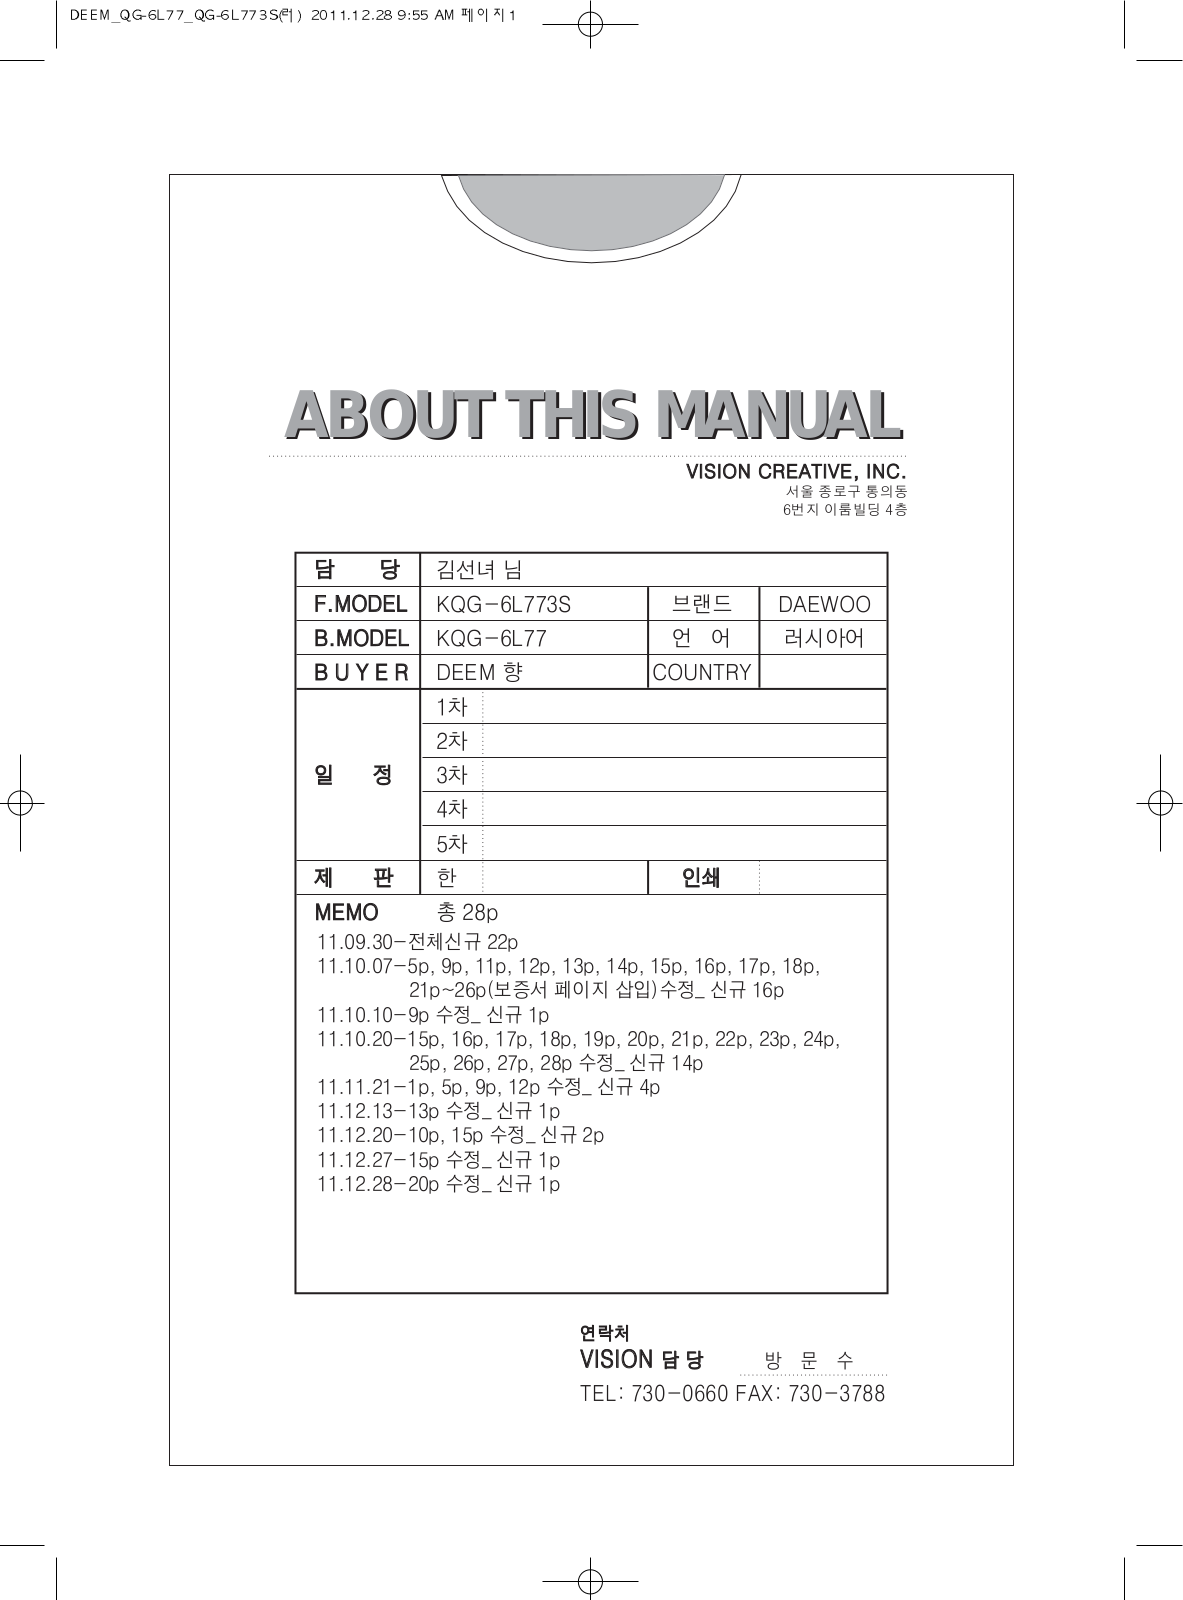 Daewoo KQG-6L77 User Manual